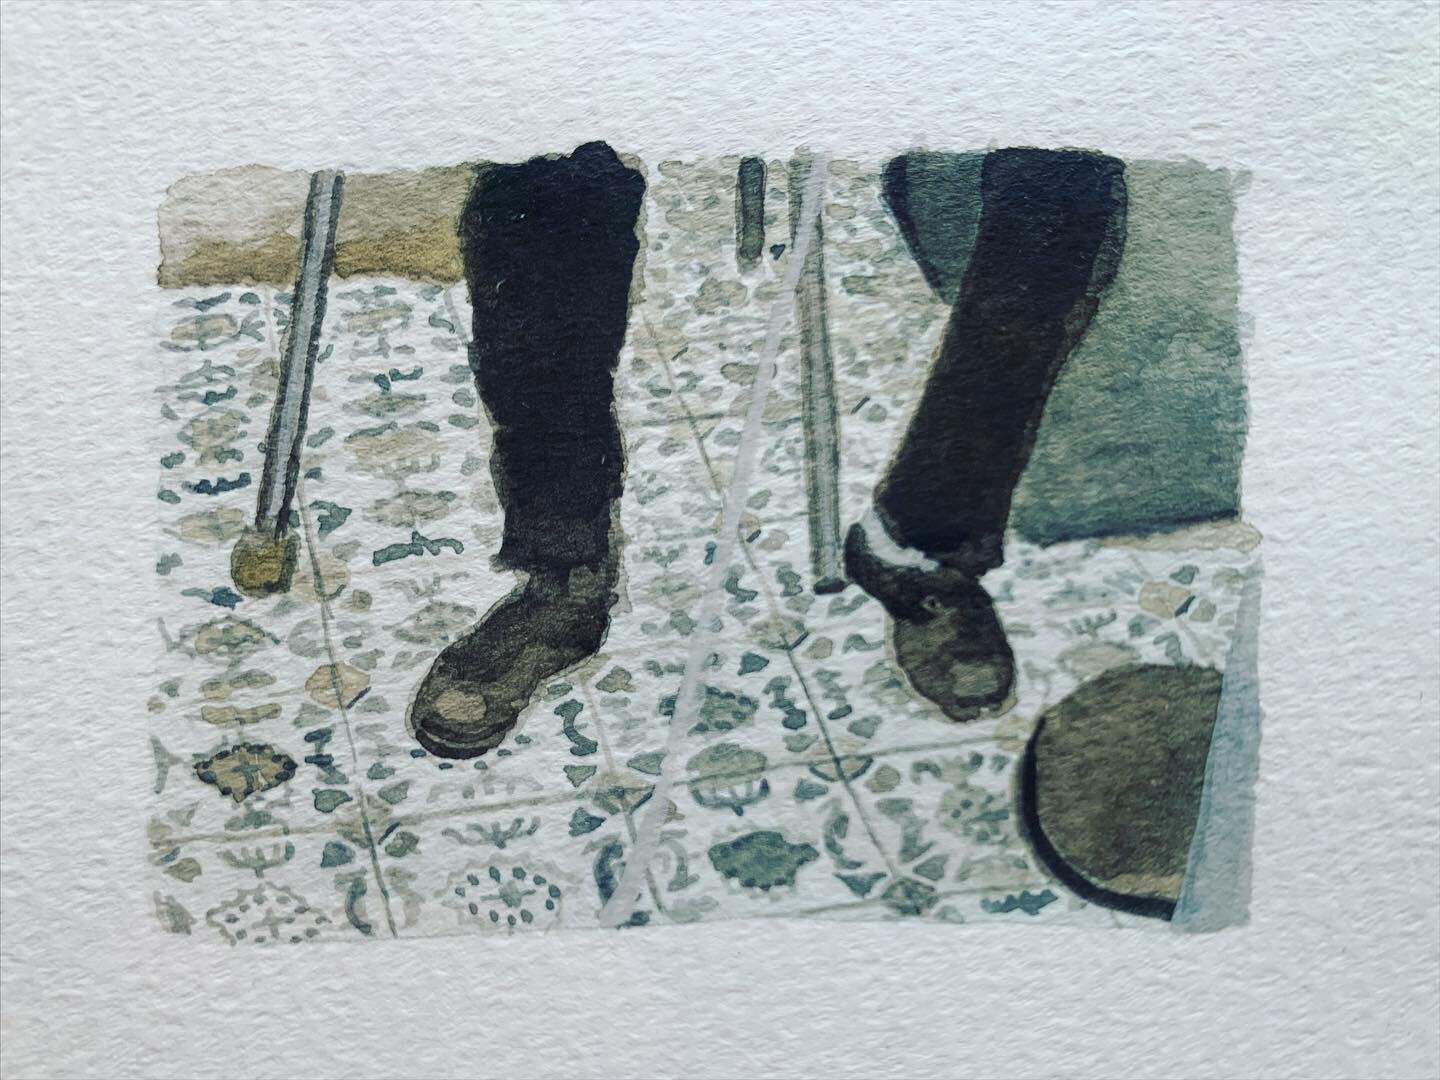 Elliot smiths feet in the short film LUCKY THREE by Jen cohen 

#watercolour #watercolor
#Watercolourpainting 
##art #smallart #artonpaper #smallpainting #contemporaryart #contemporarypainting #contemporarywatercolor #jemcohen #elliotsmith #luckythre